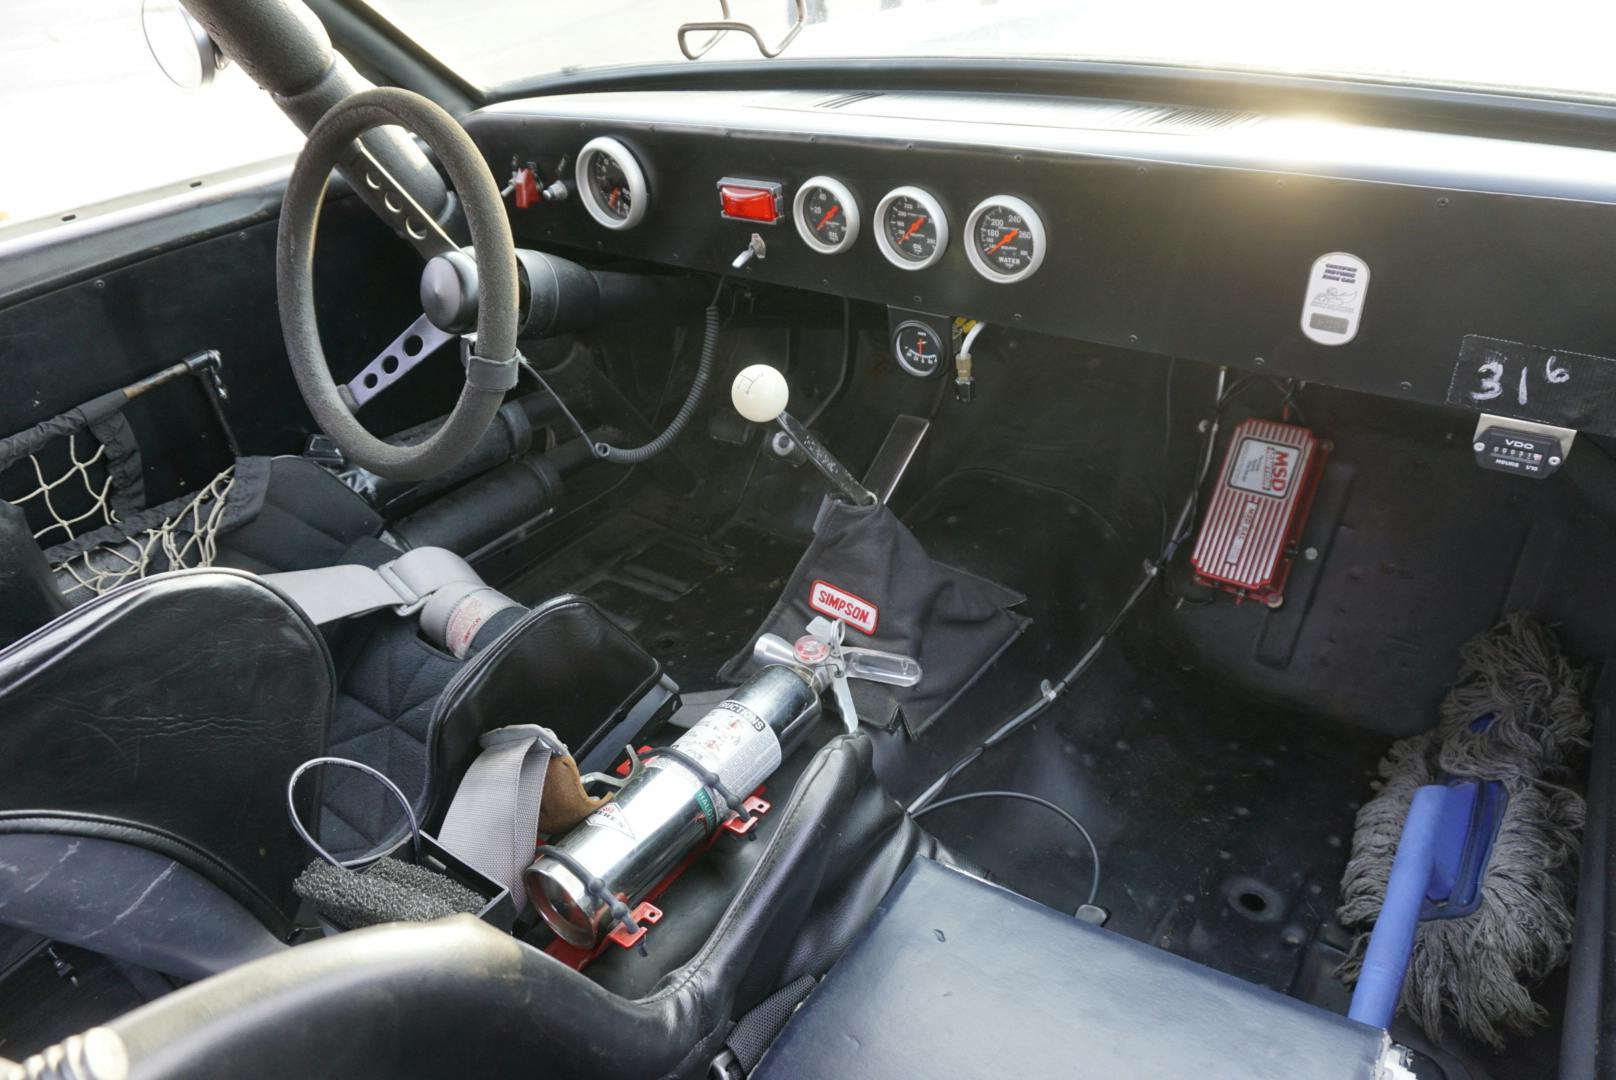 1965 Shelby GT350 Mustang interior